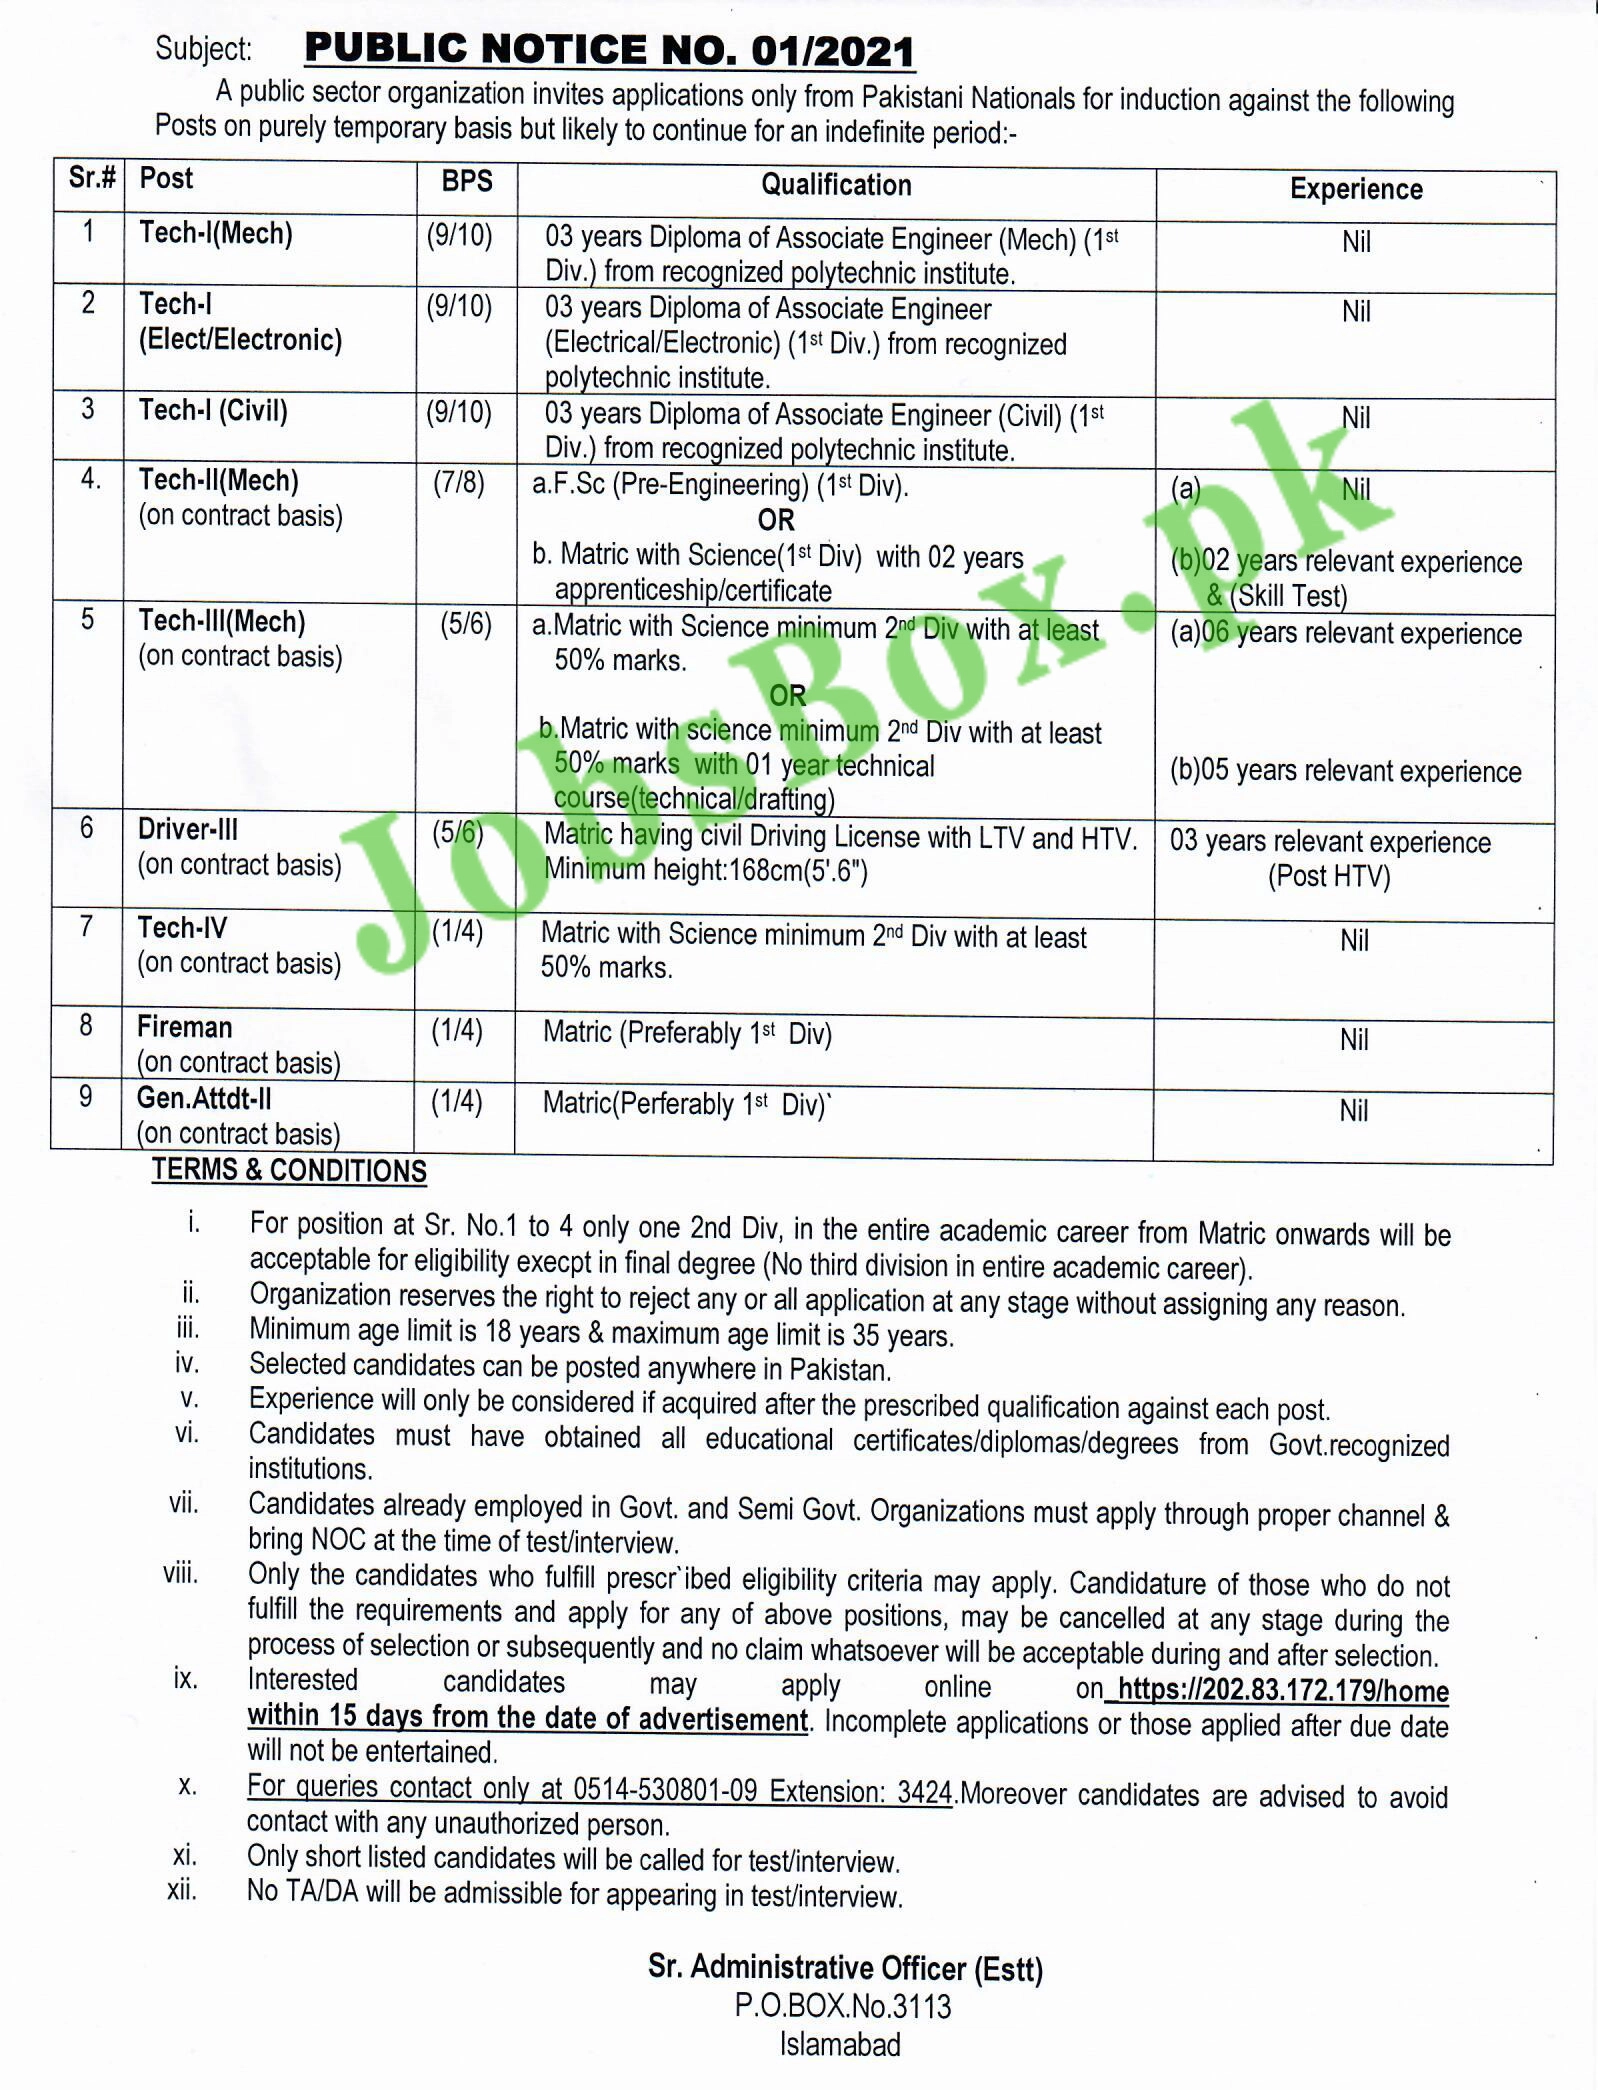 Pakistan Atomic Energy Jobs 2021 PO Box 3113 Islamabad jobs